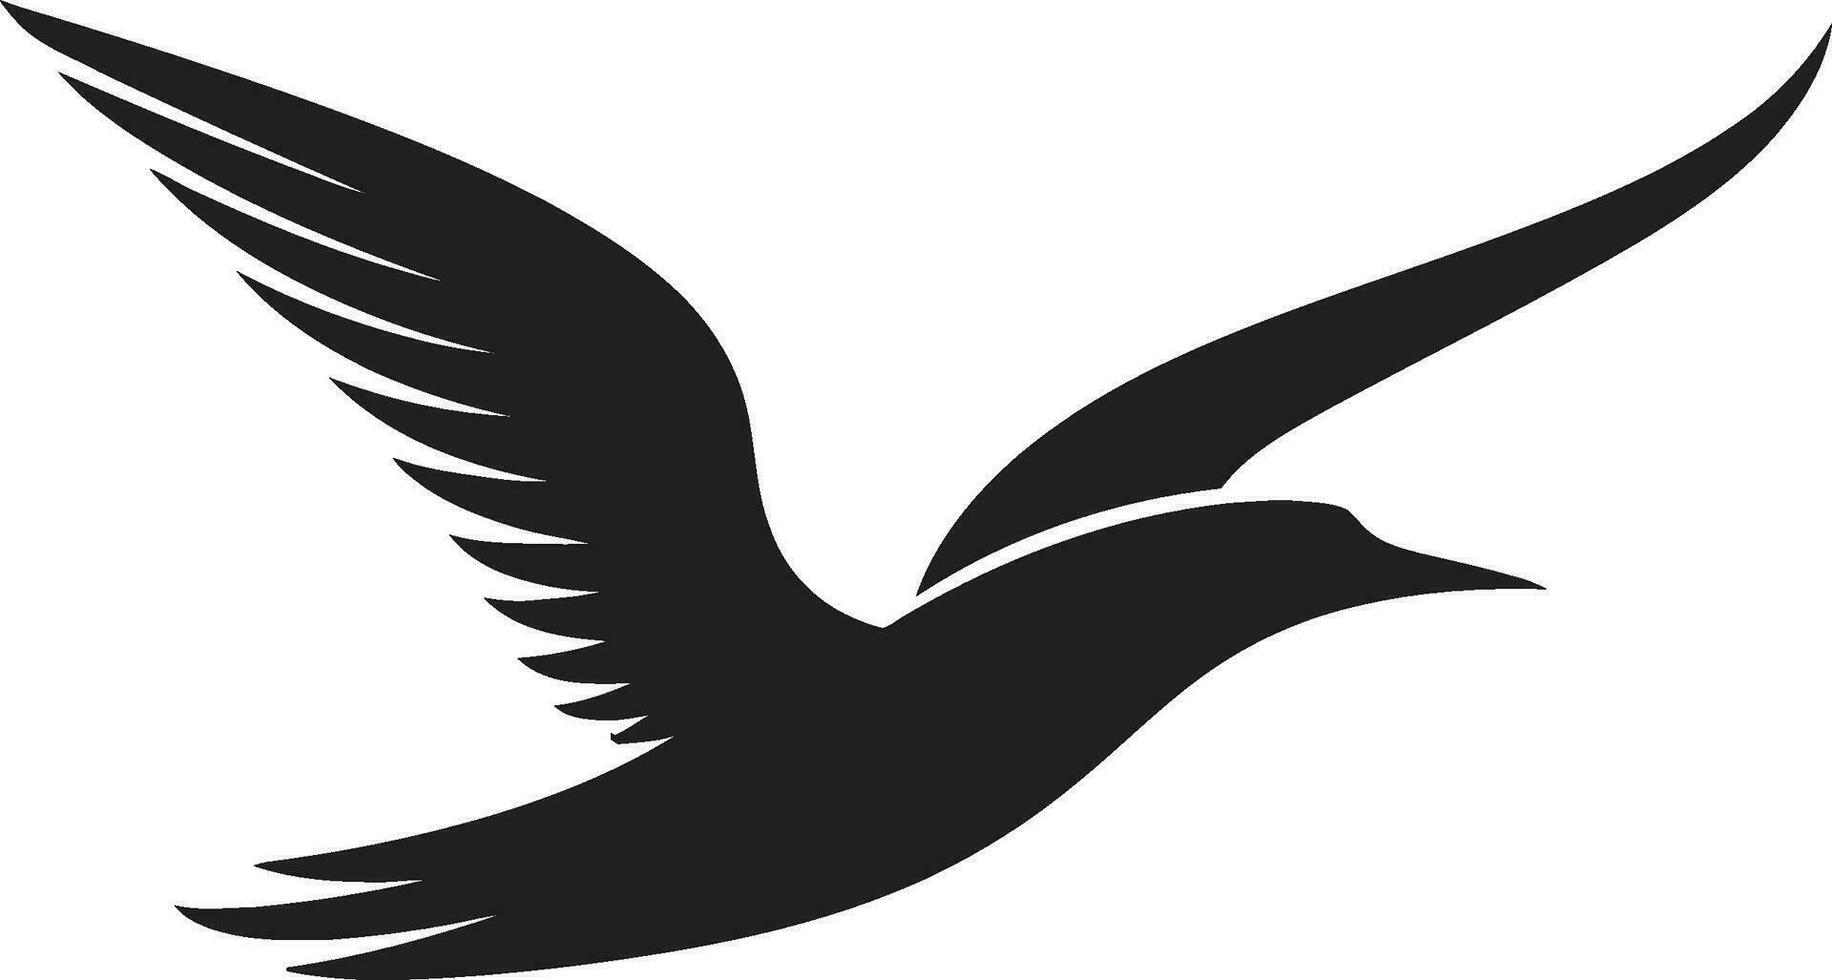 skuggad flyg svart fiskmås ikon i onyx inkwell elegans fiskmås symbol profil i vektor